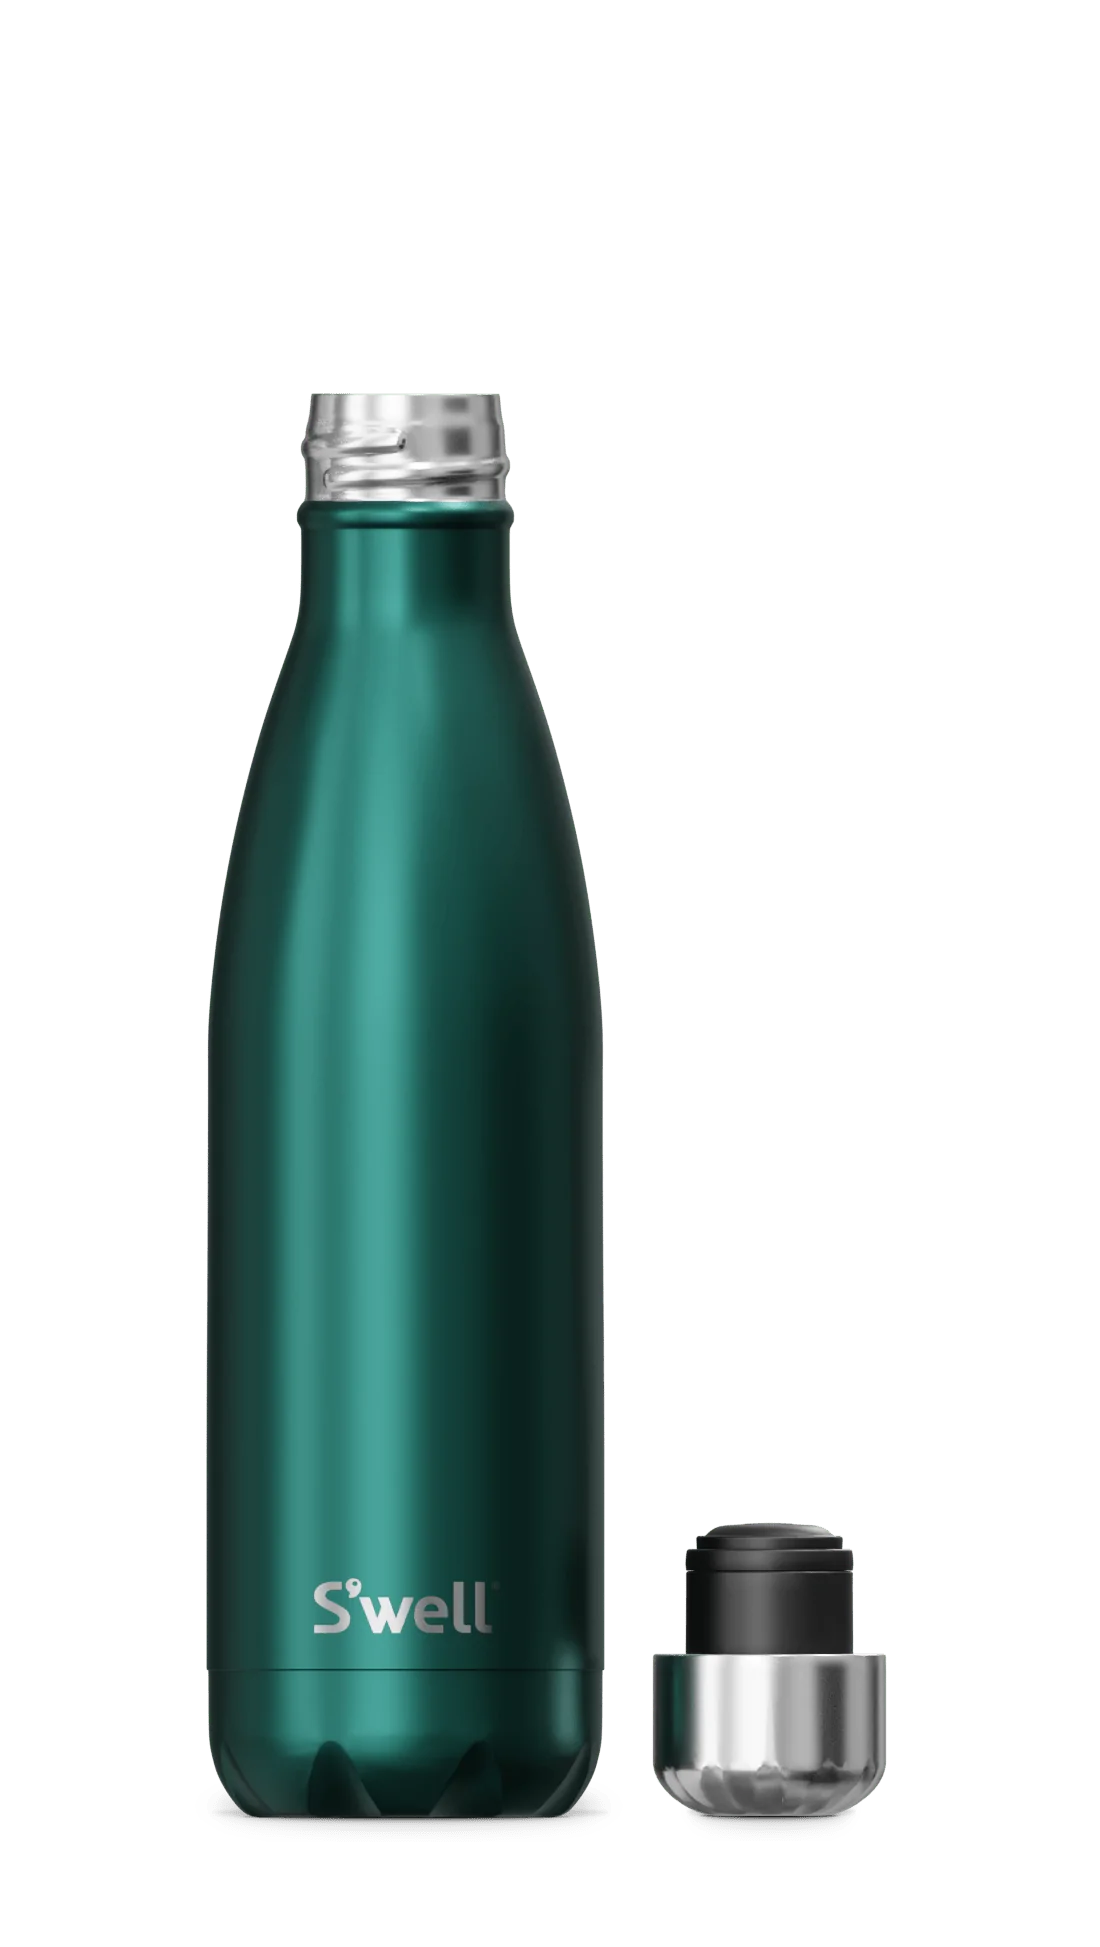 S'well 17oz Insulated Bottle – Green Sapphire